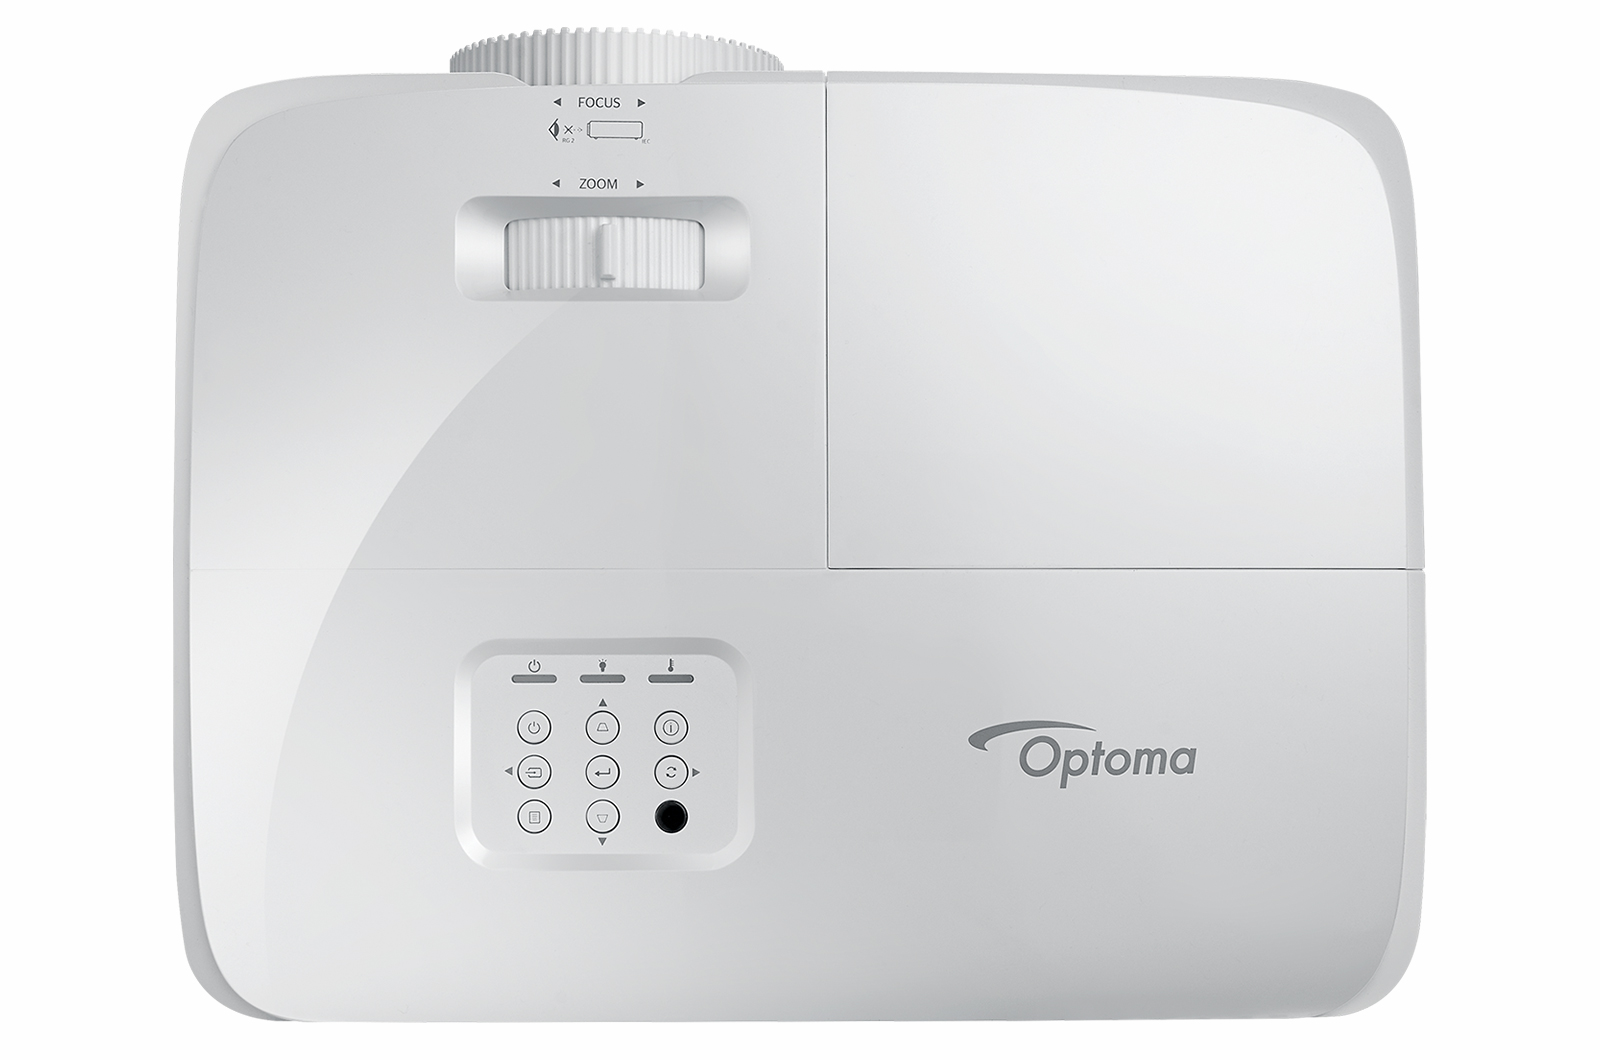 Optoma HD39HDR